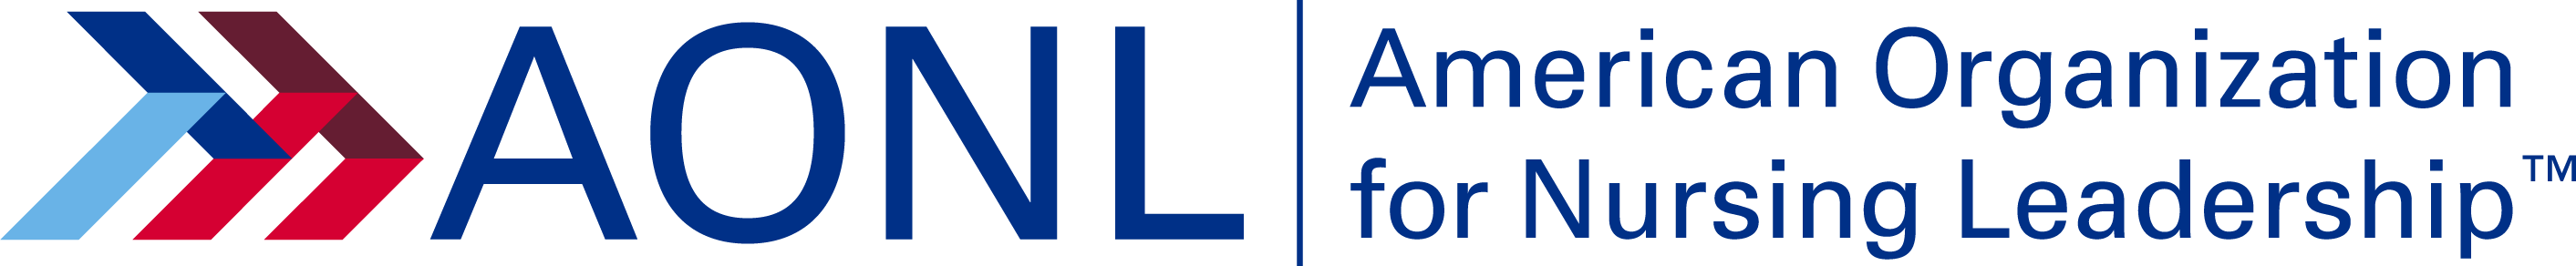 AONL_Logo_Hor__RGB